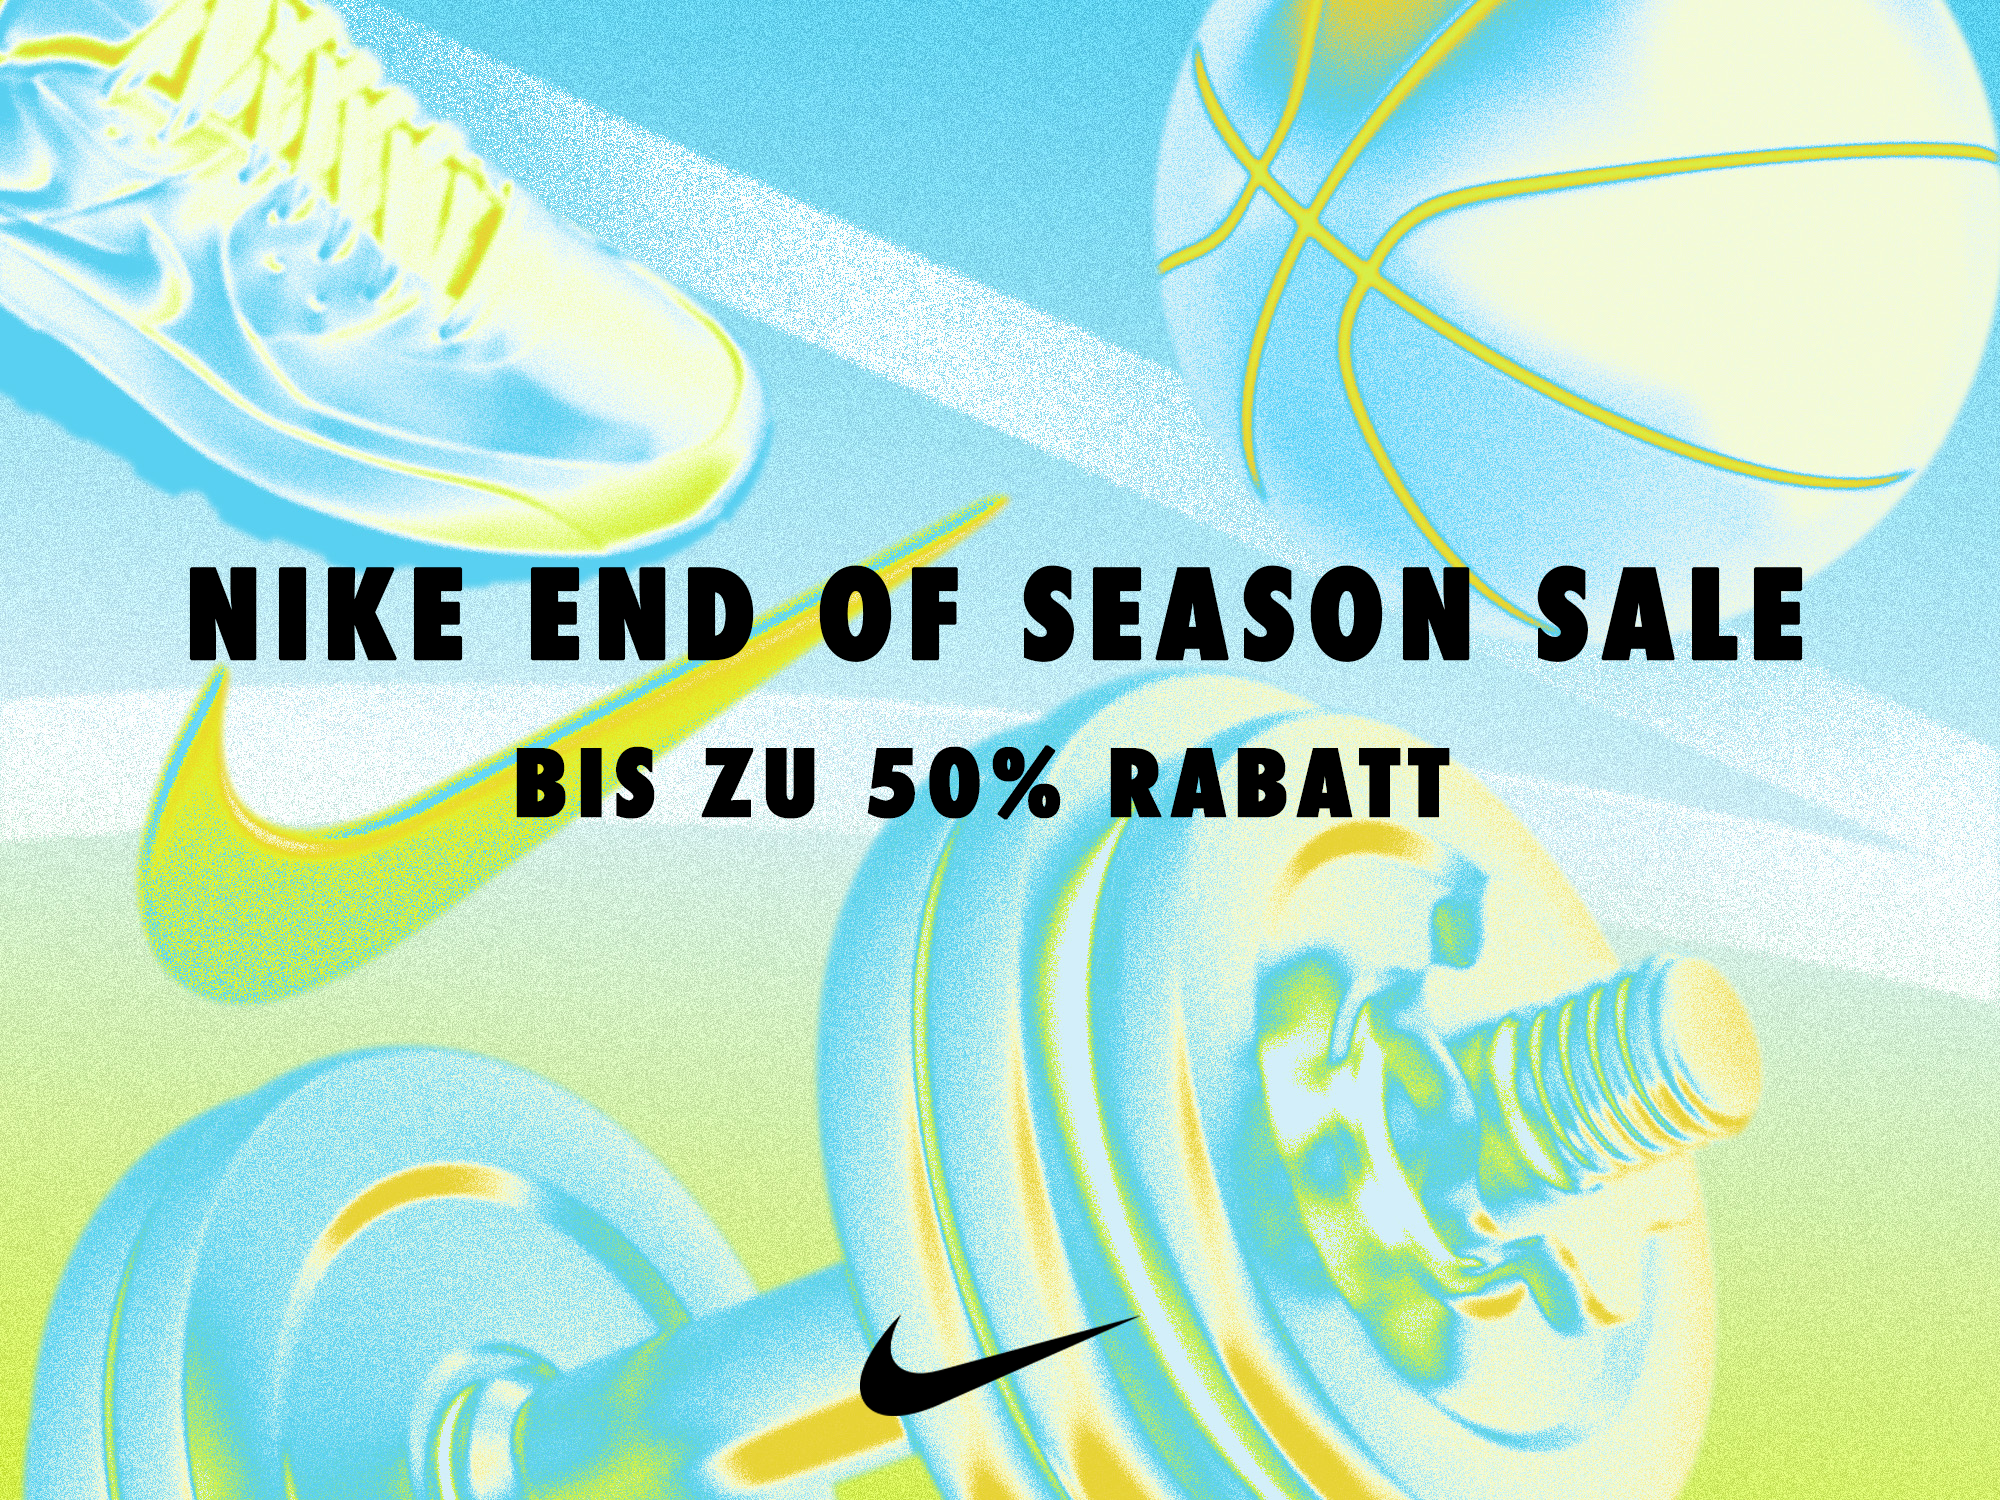 nike end of season sale banner